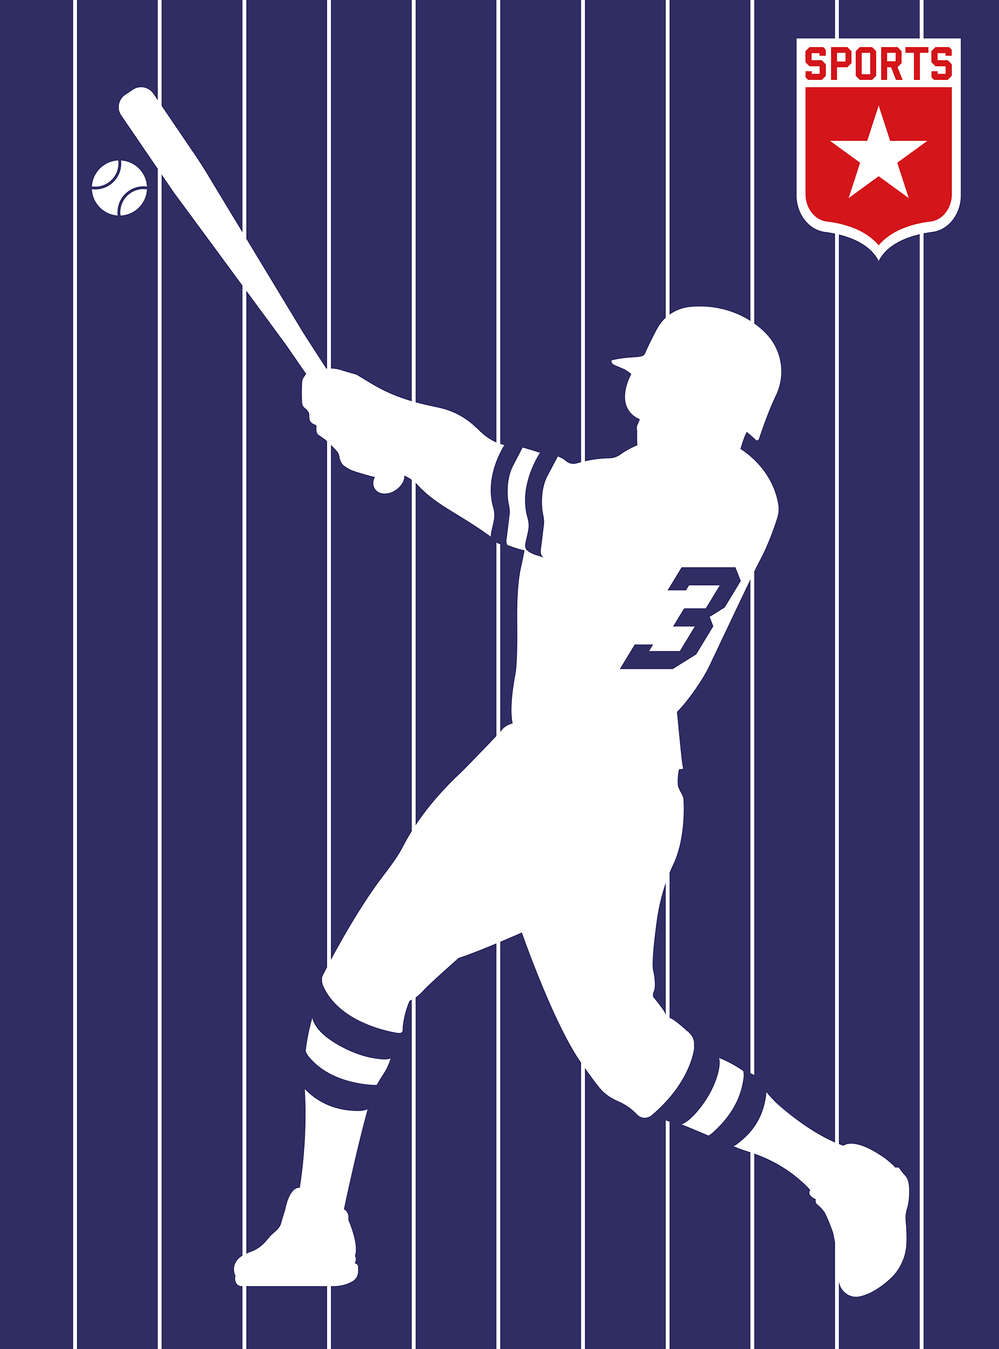             Photo wallpaper sport baseball motif player icon
        